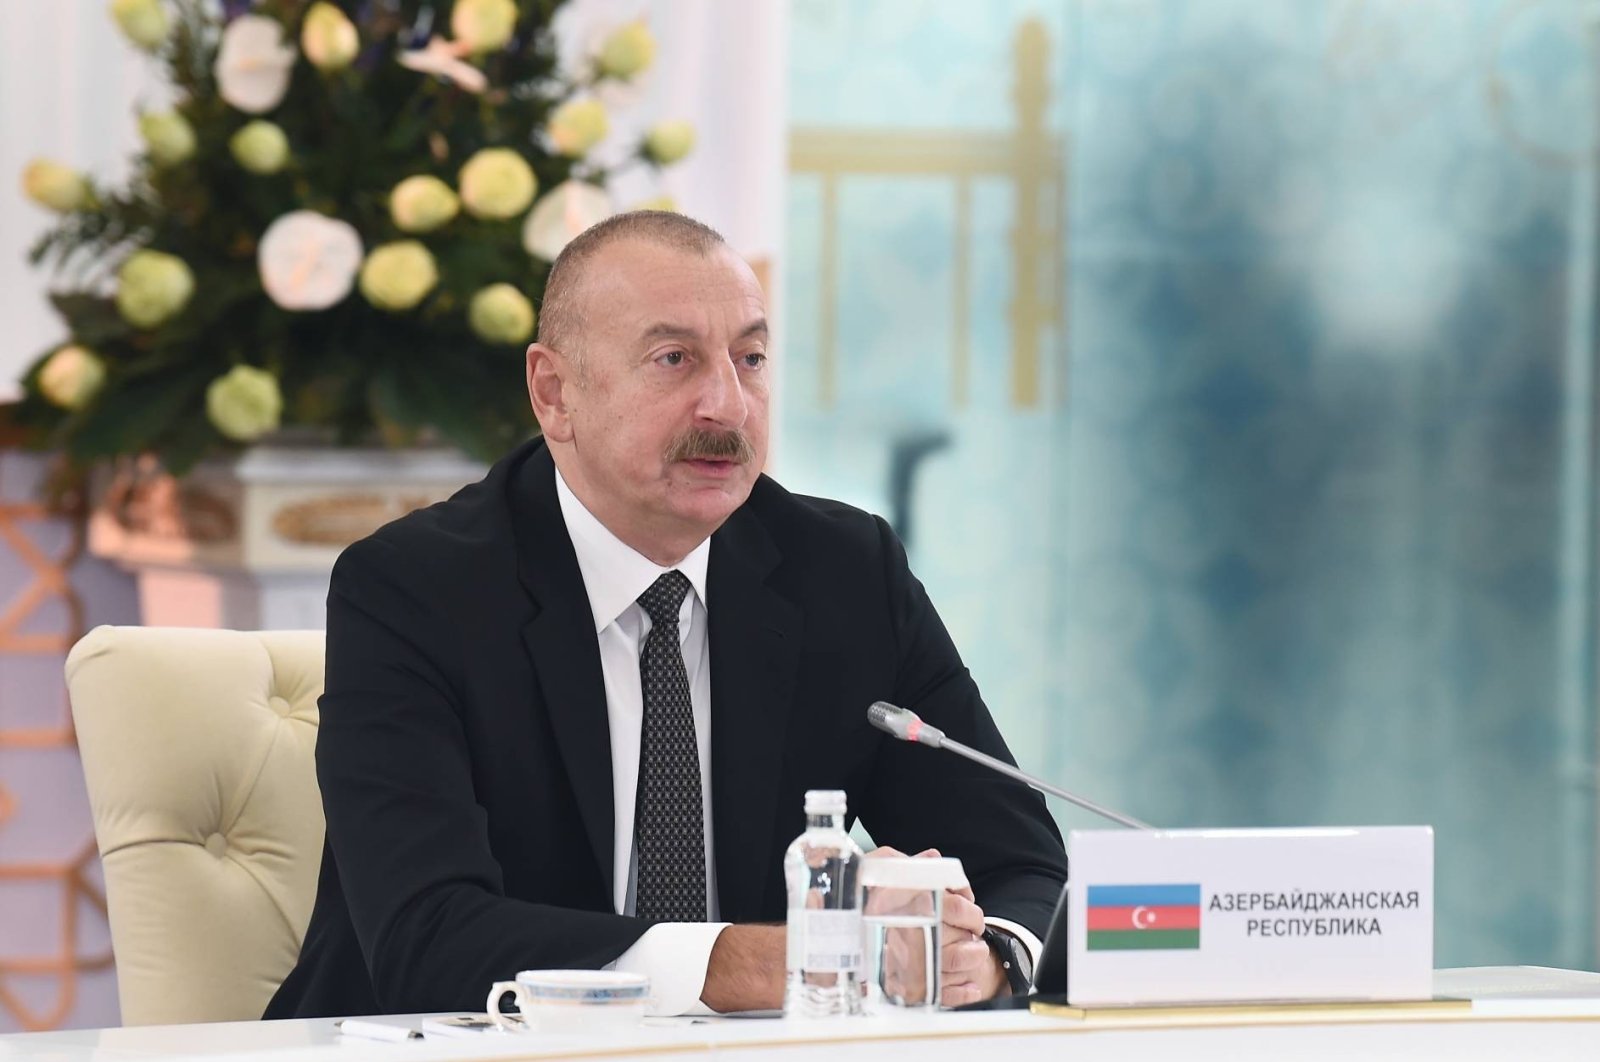 Azerbaijani President Ilham Aliyev at a regional summit in Kazakhstan’s capital Astana, Oct. 14, 2022. (IHA Photo)